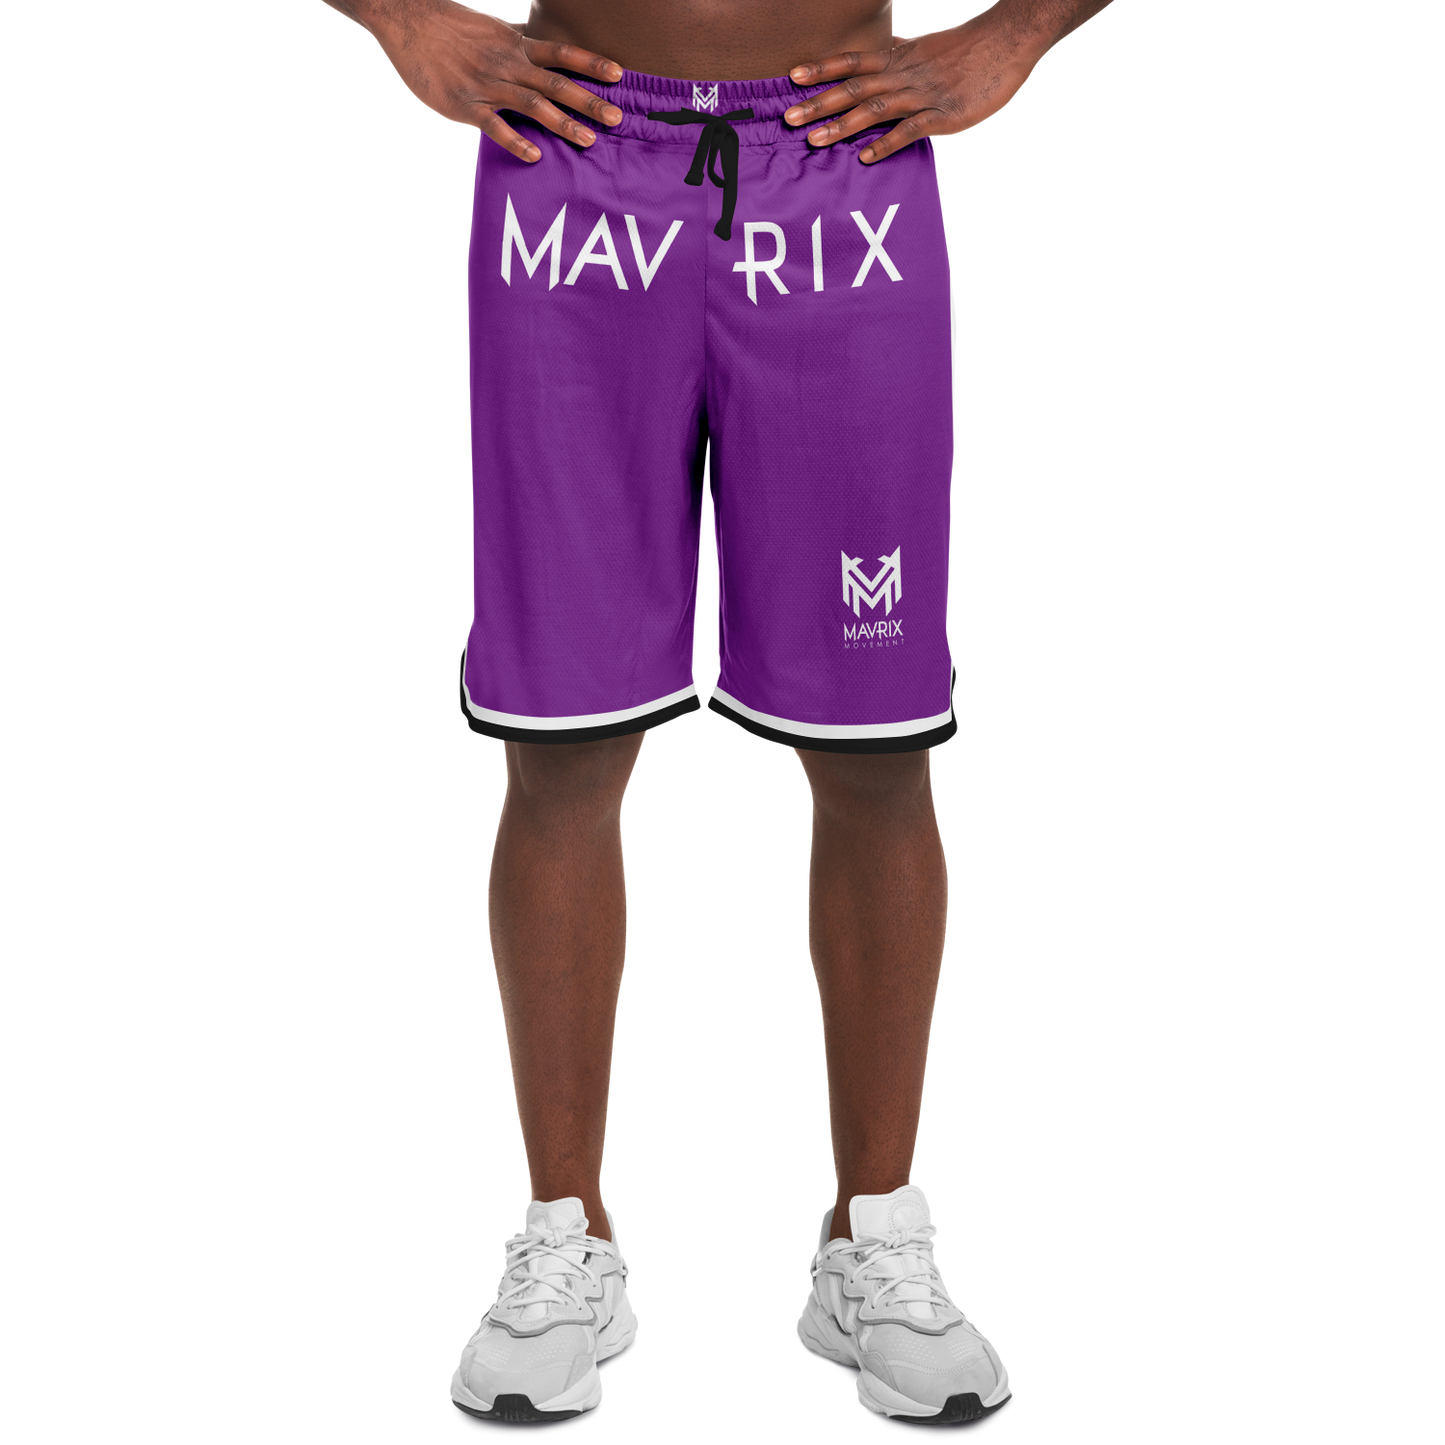 Mavrix Team Purple - Basketball Shorts